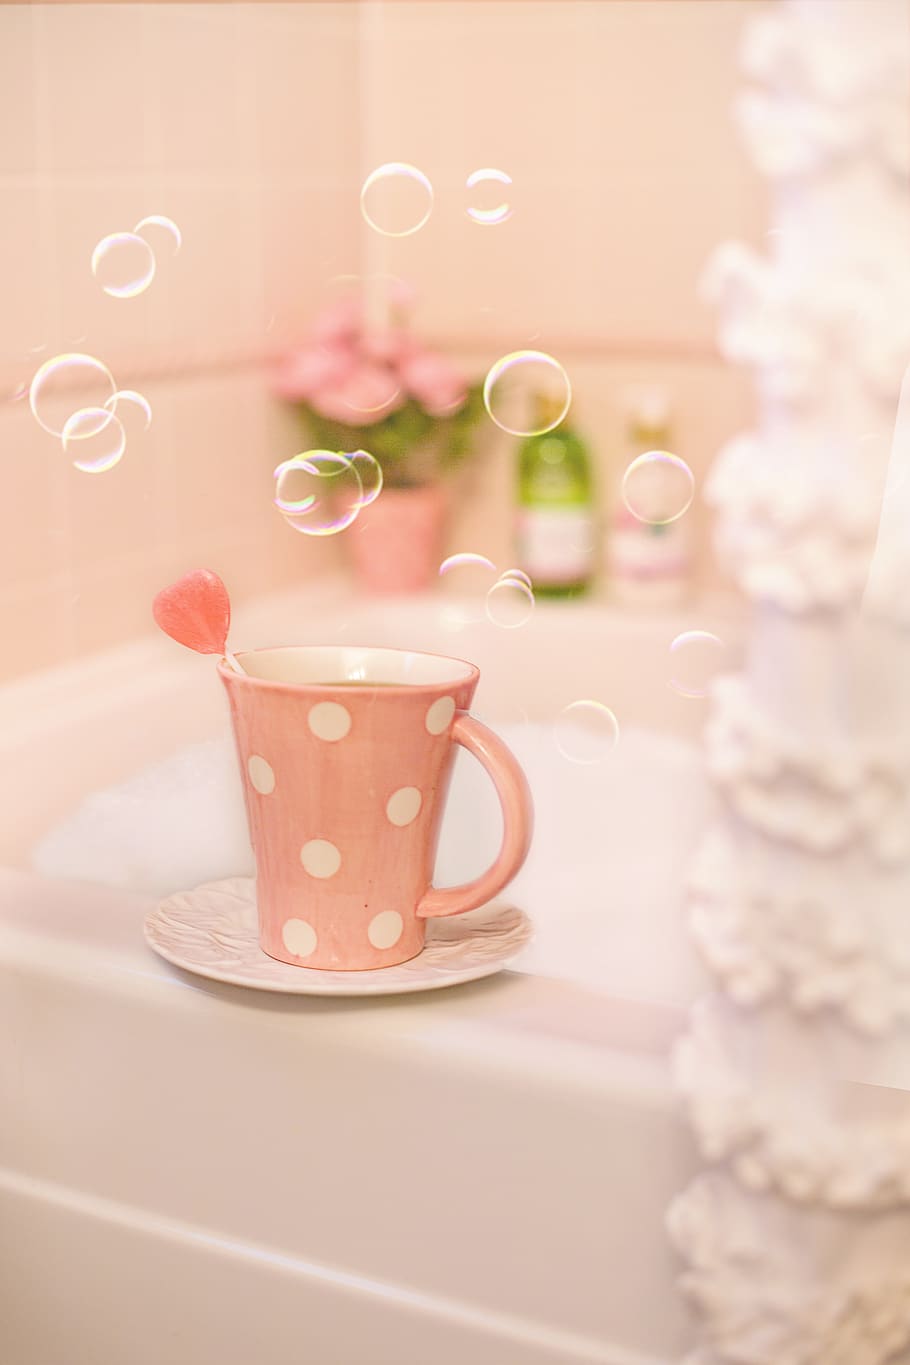 bubble bath, bath, pink, valentine's day, romantic, romance, tea, bathtub, bubbles, spa